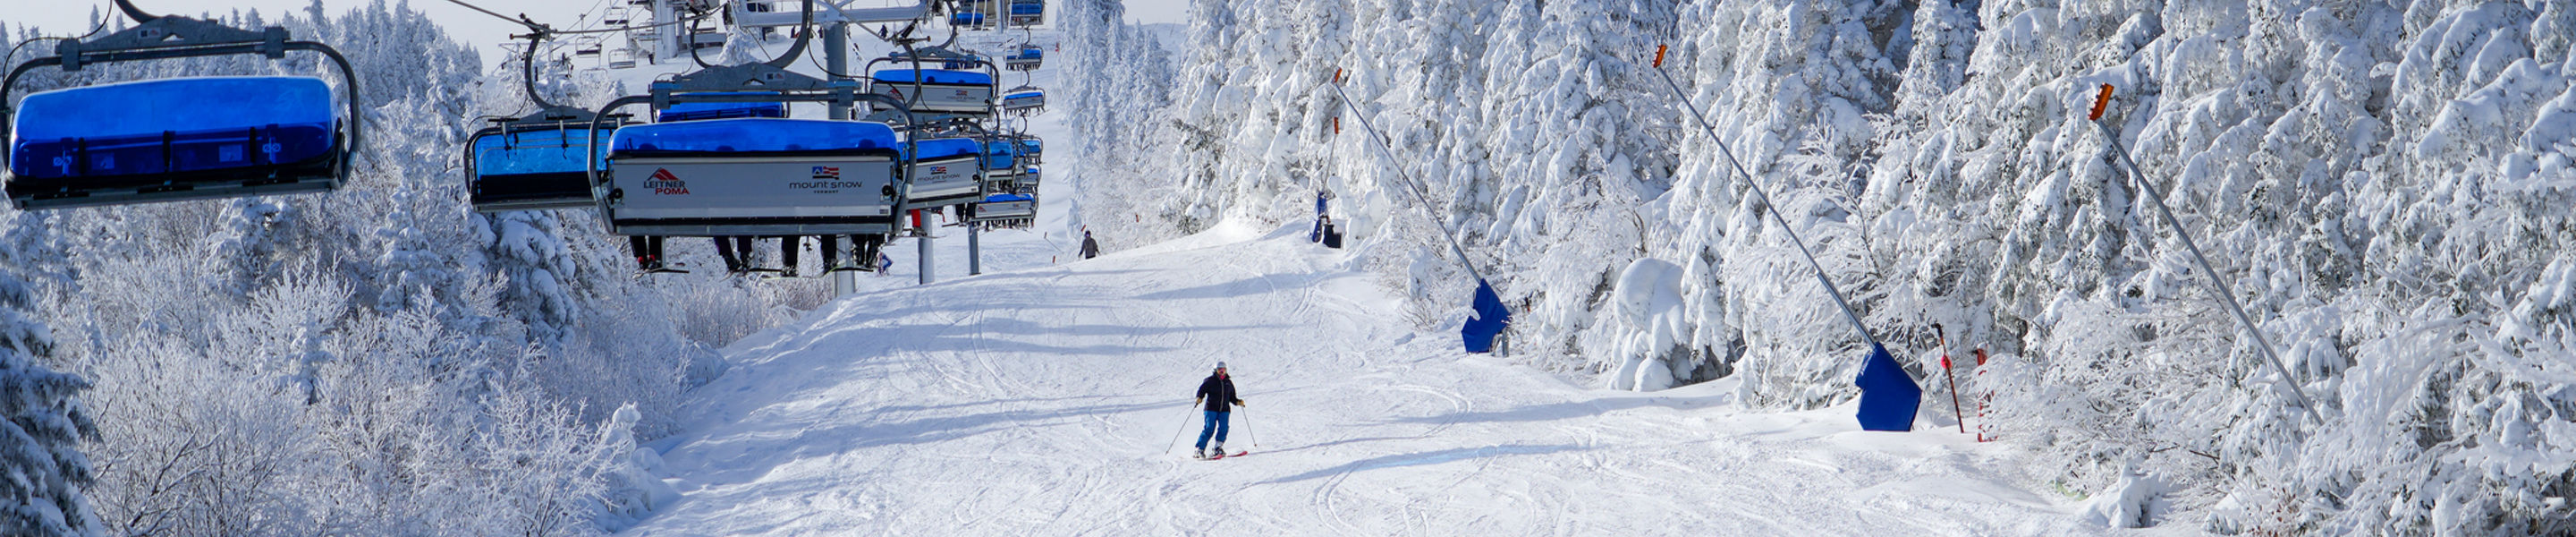 Ski and Snowboard Lift Ticket Prices Mount Snow Ski Resort